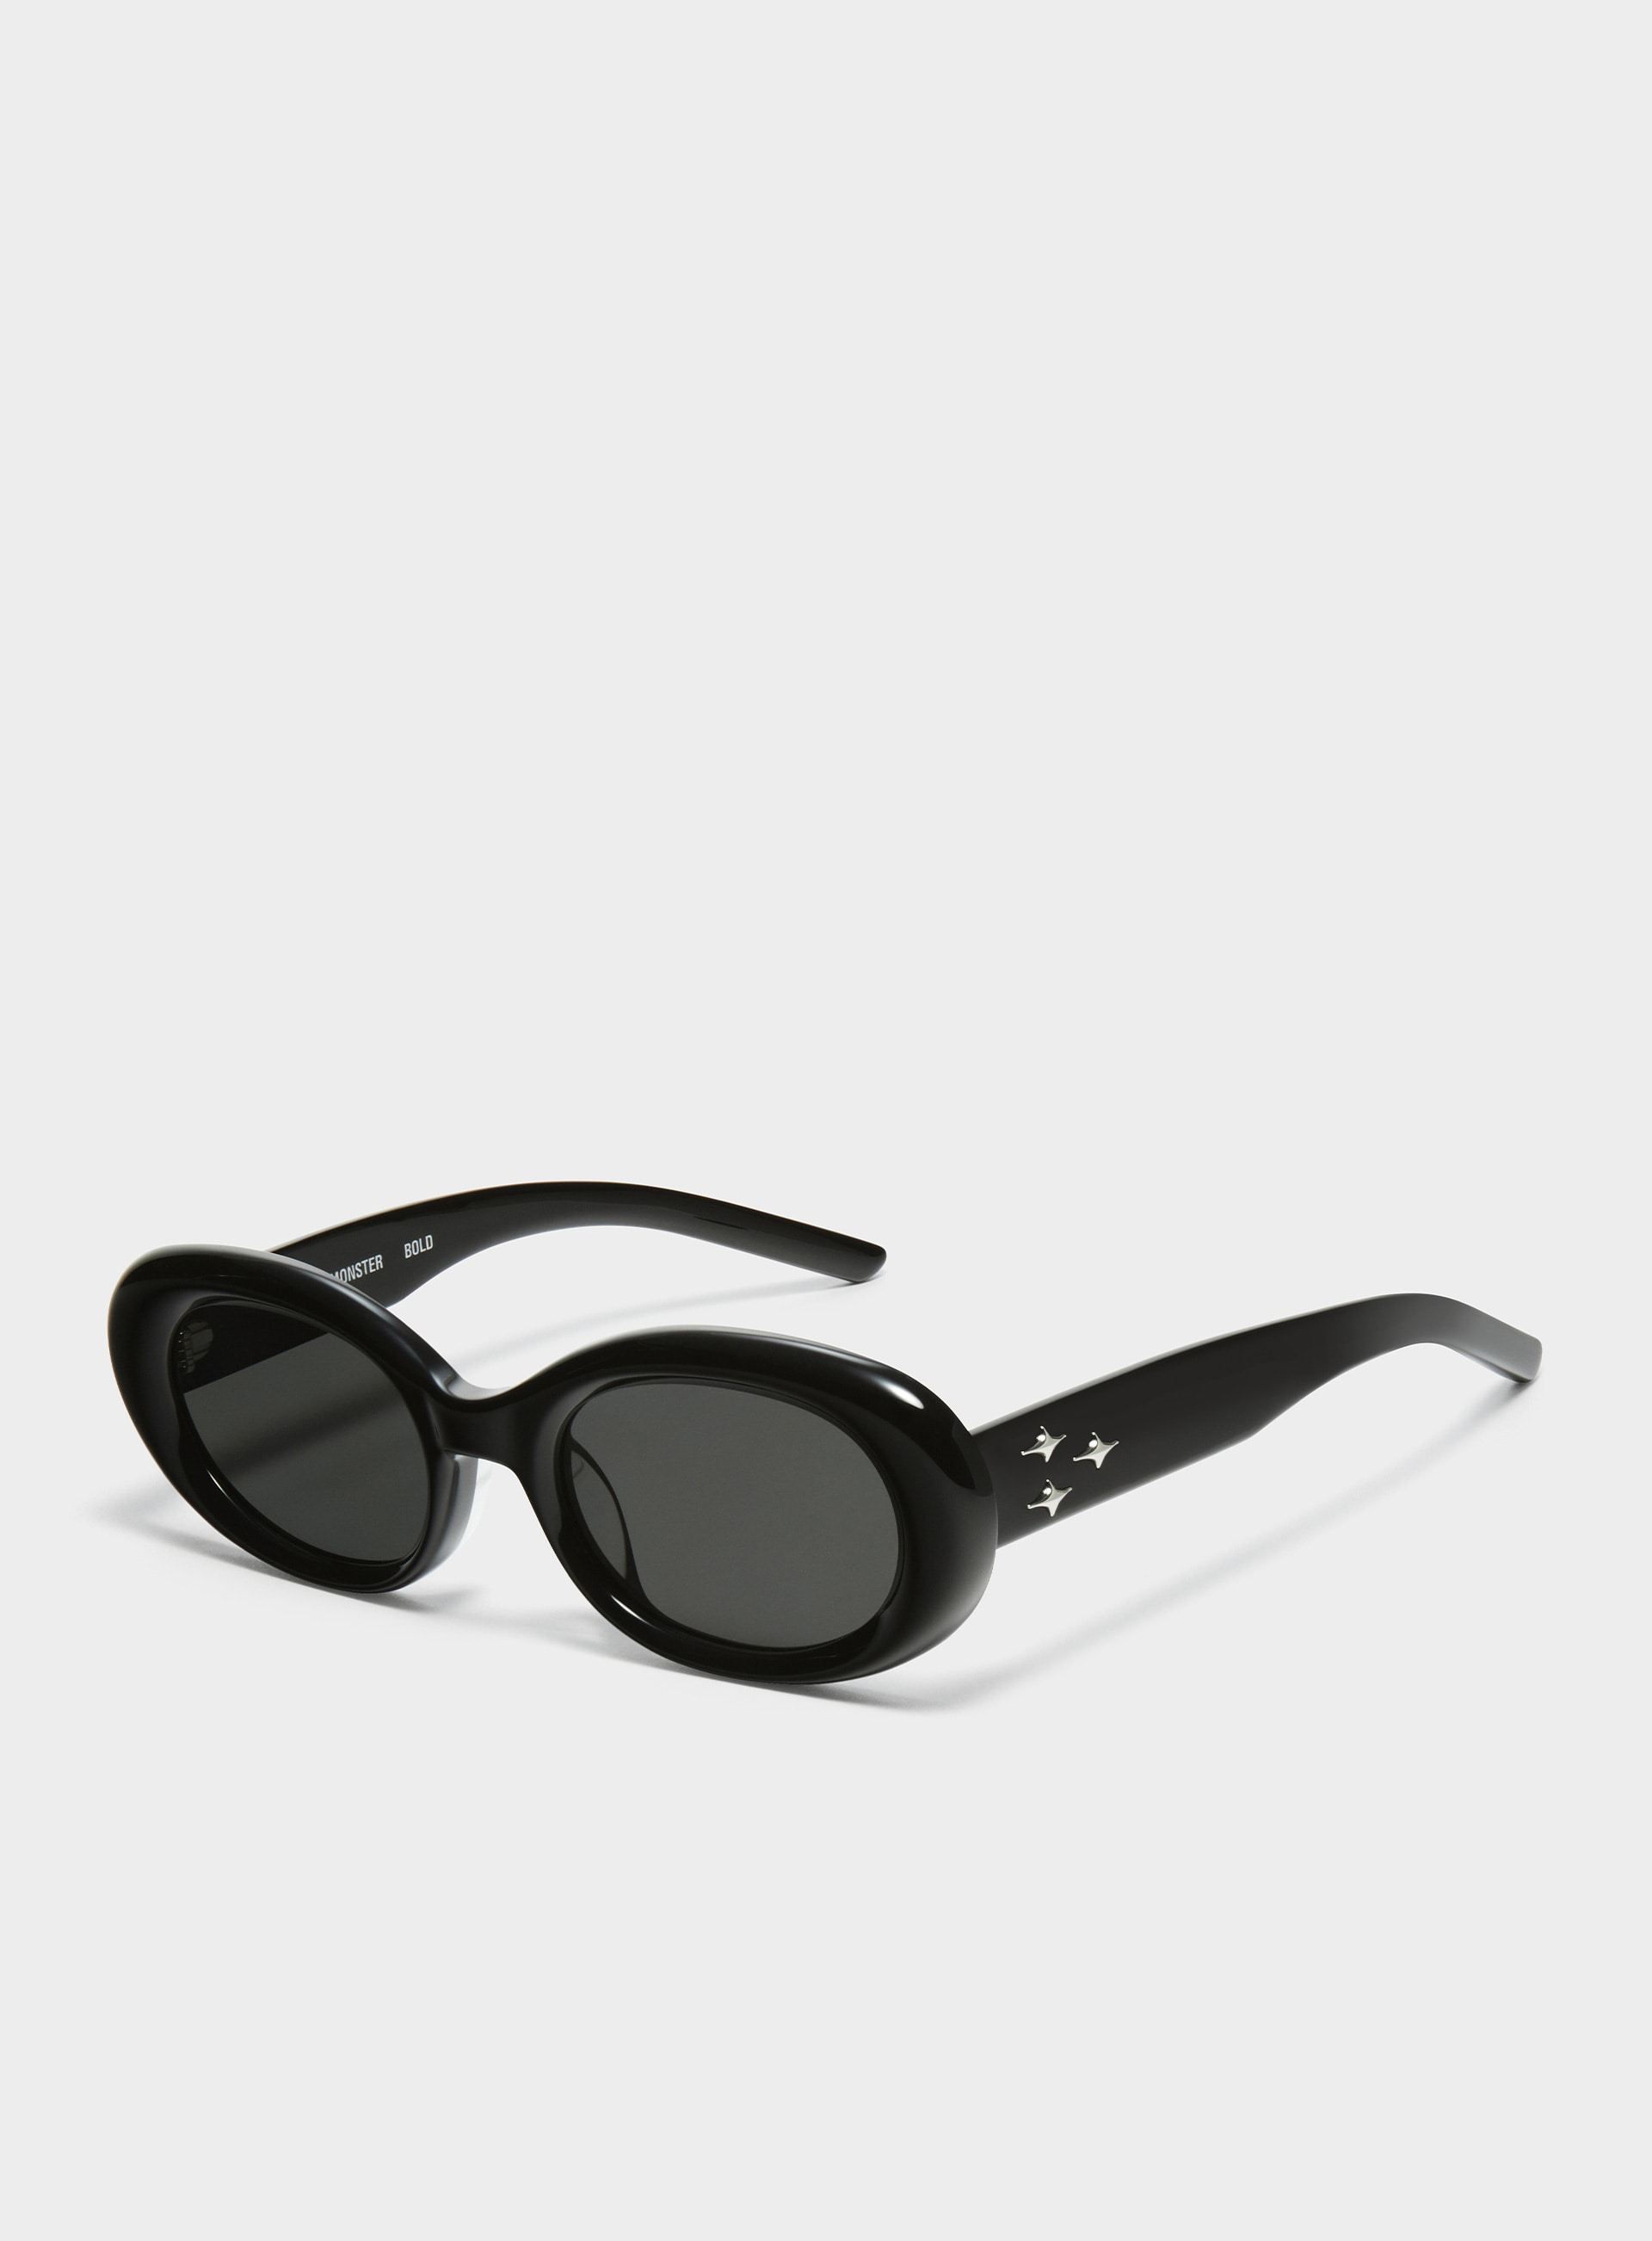 GENTLE MONSTER BOLD Eve Sunglasses サングラス